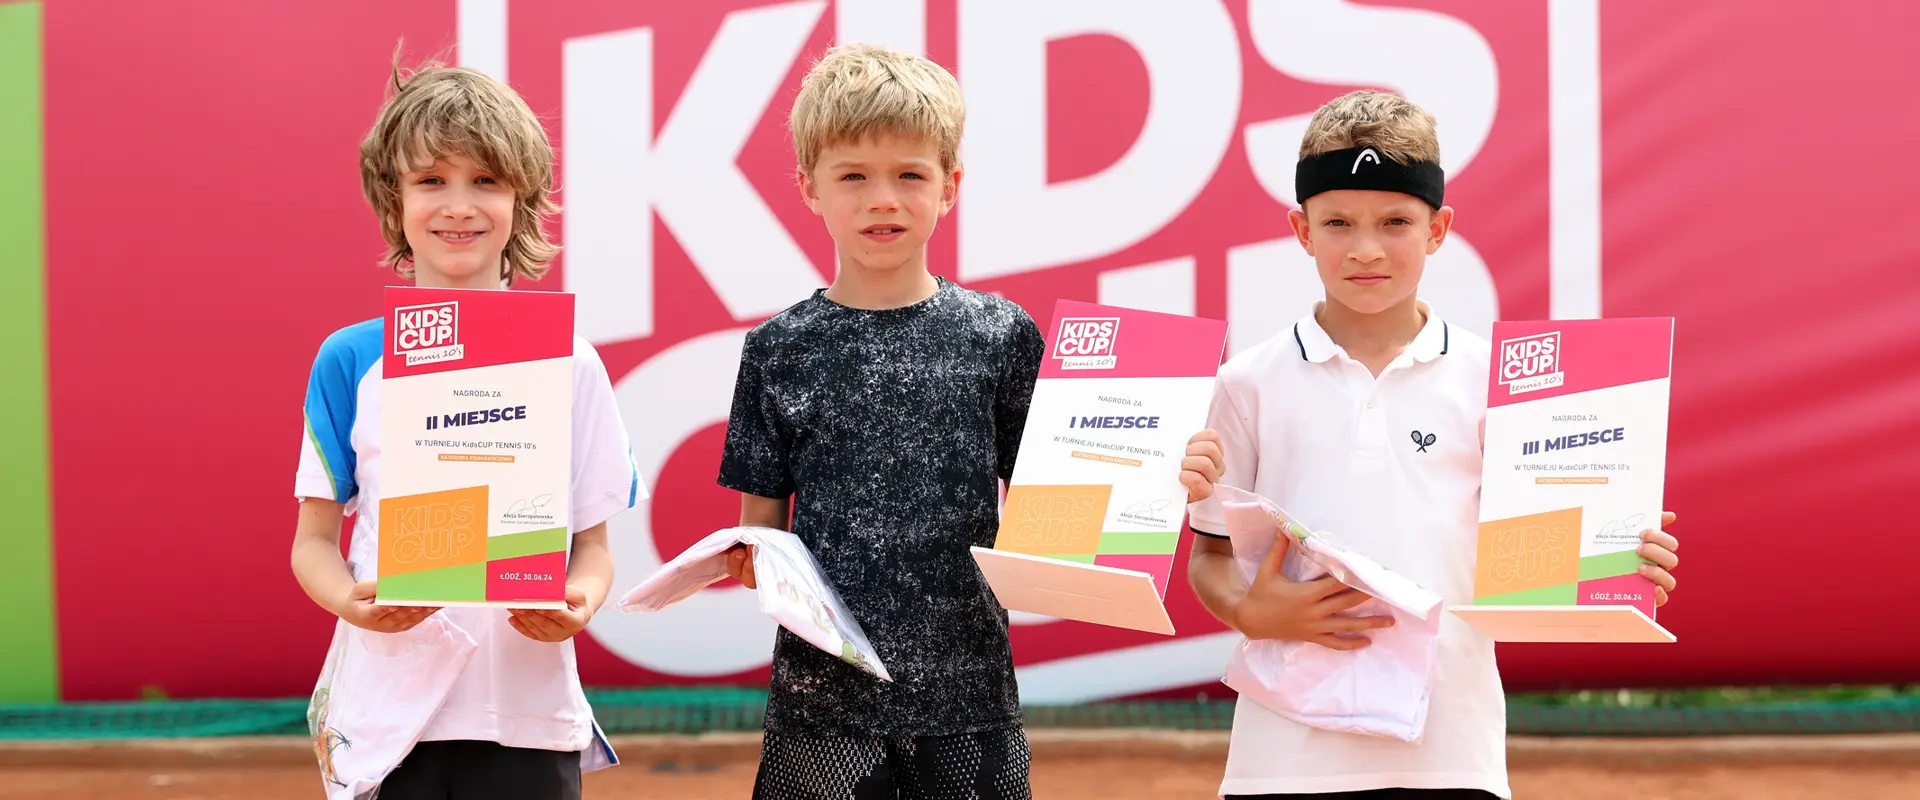 KidsCUP Tennis10